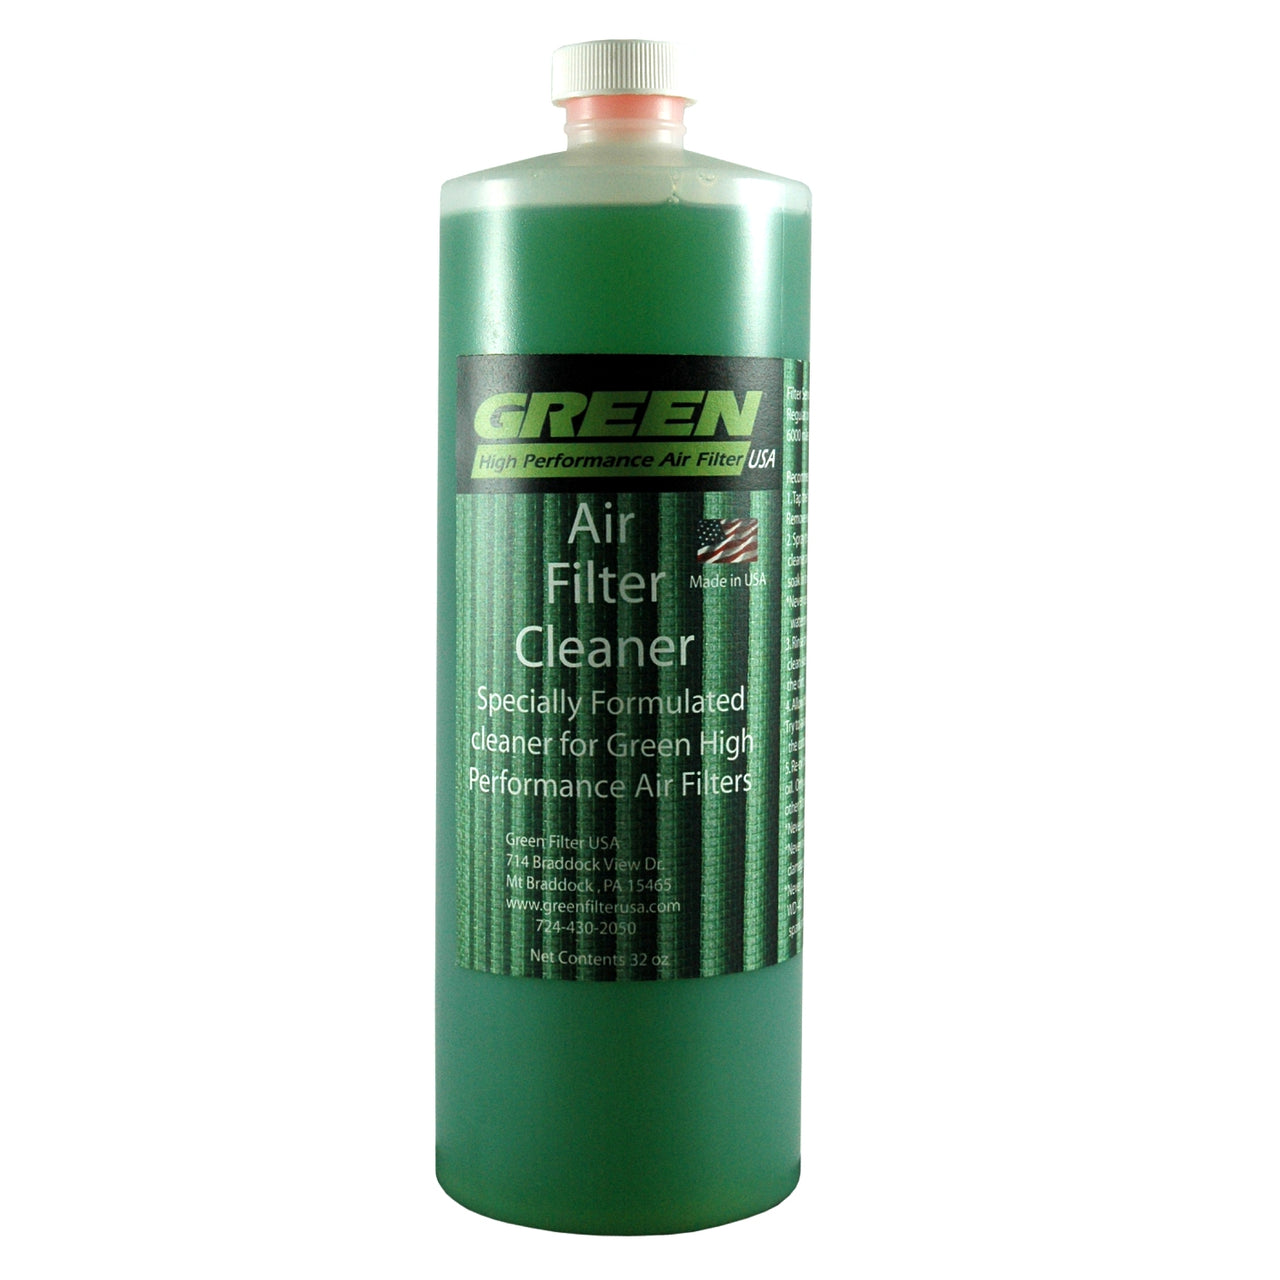 Green Filter Air Filter Cleaner - 32oz Refill